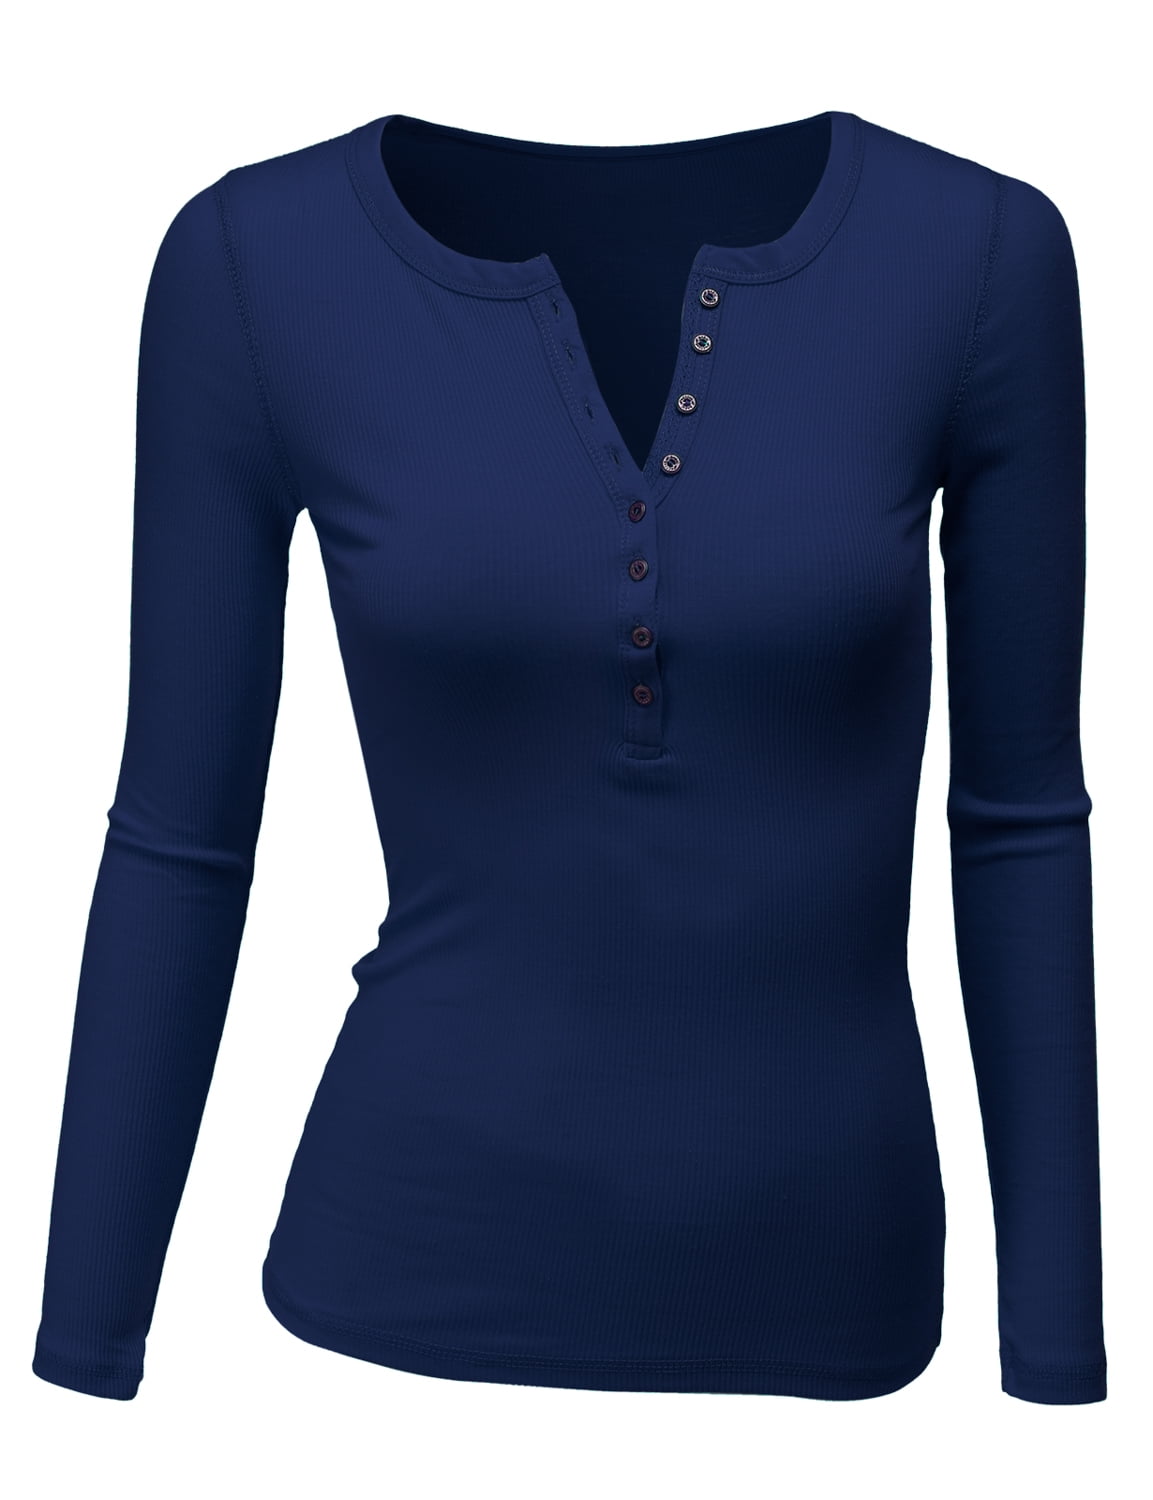 Doublju Women's Thermal Henley Long Sleeve Top with Plus Size - Walmart.com